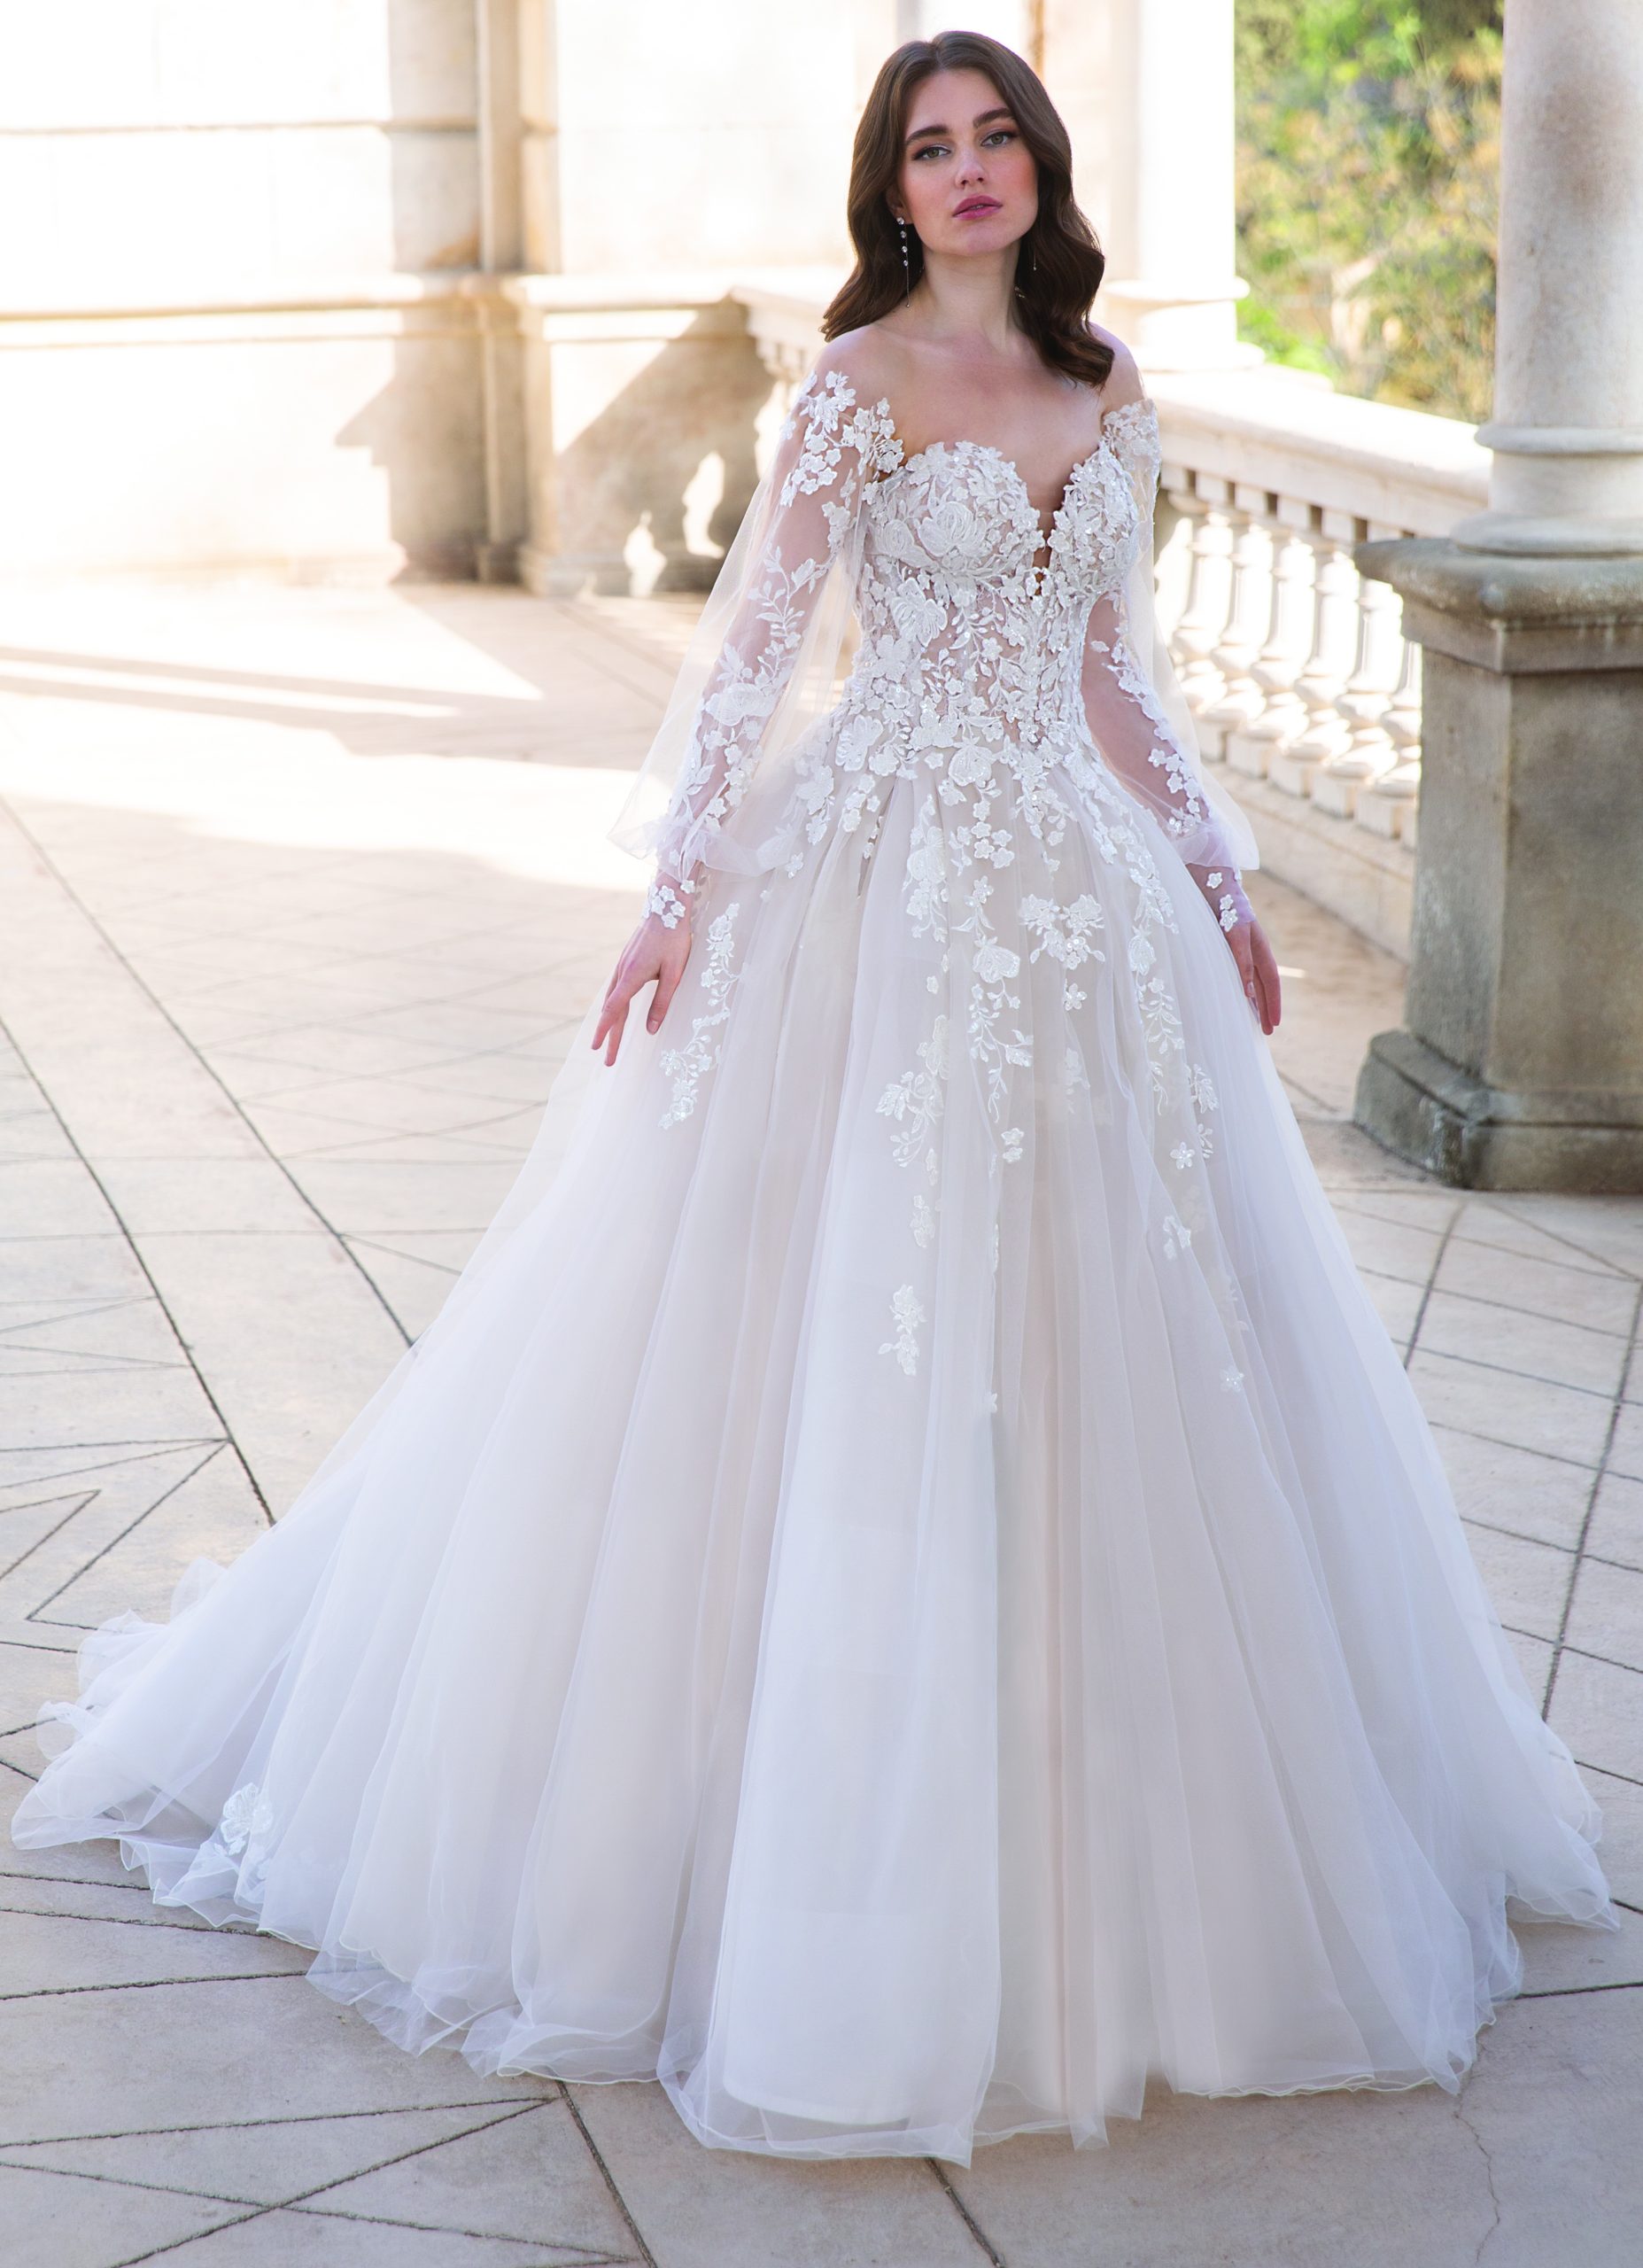 21 Princess Wedding Dresses For Fairy Tale Celebration | Wedding Dresses  Guide | Ball gowns, Wedding dress guide, Ball gowns wedding